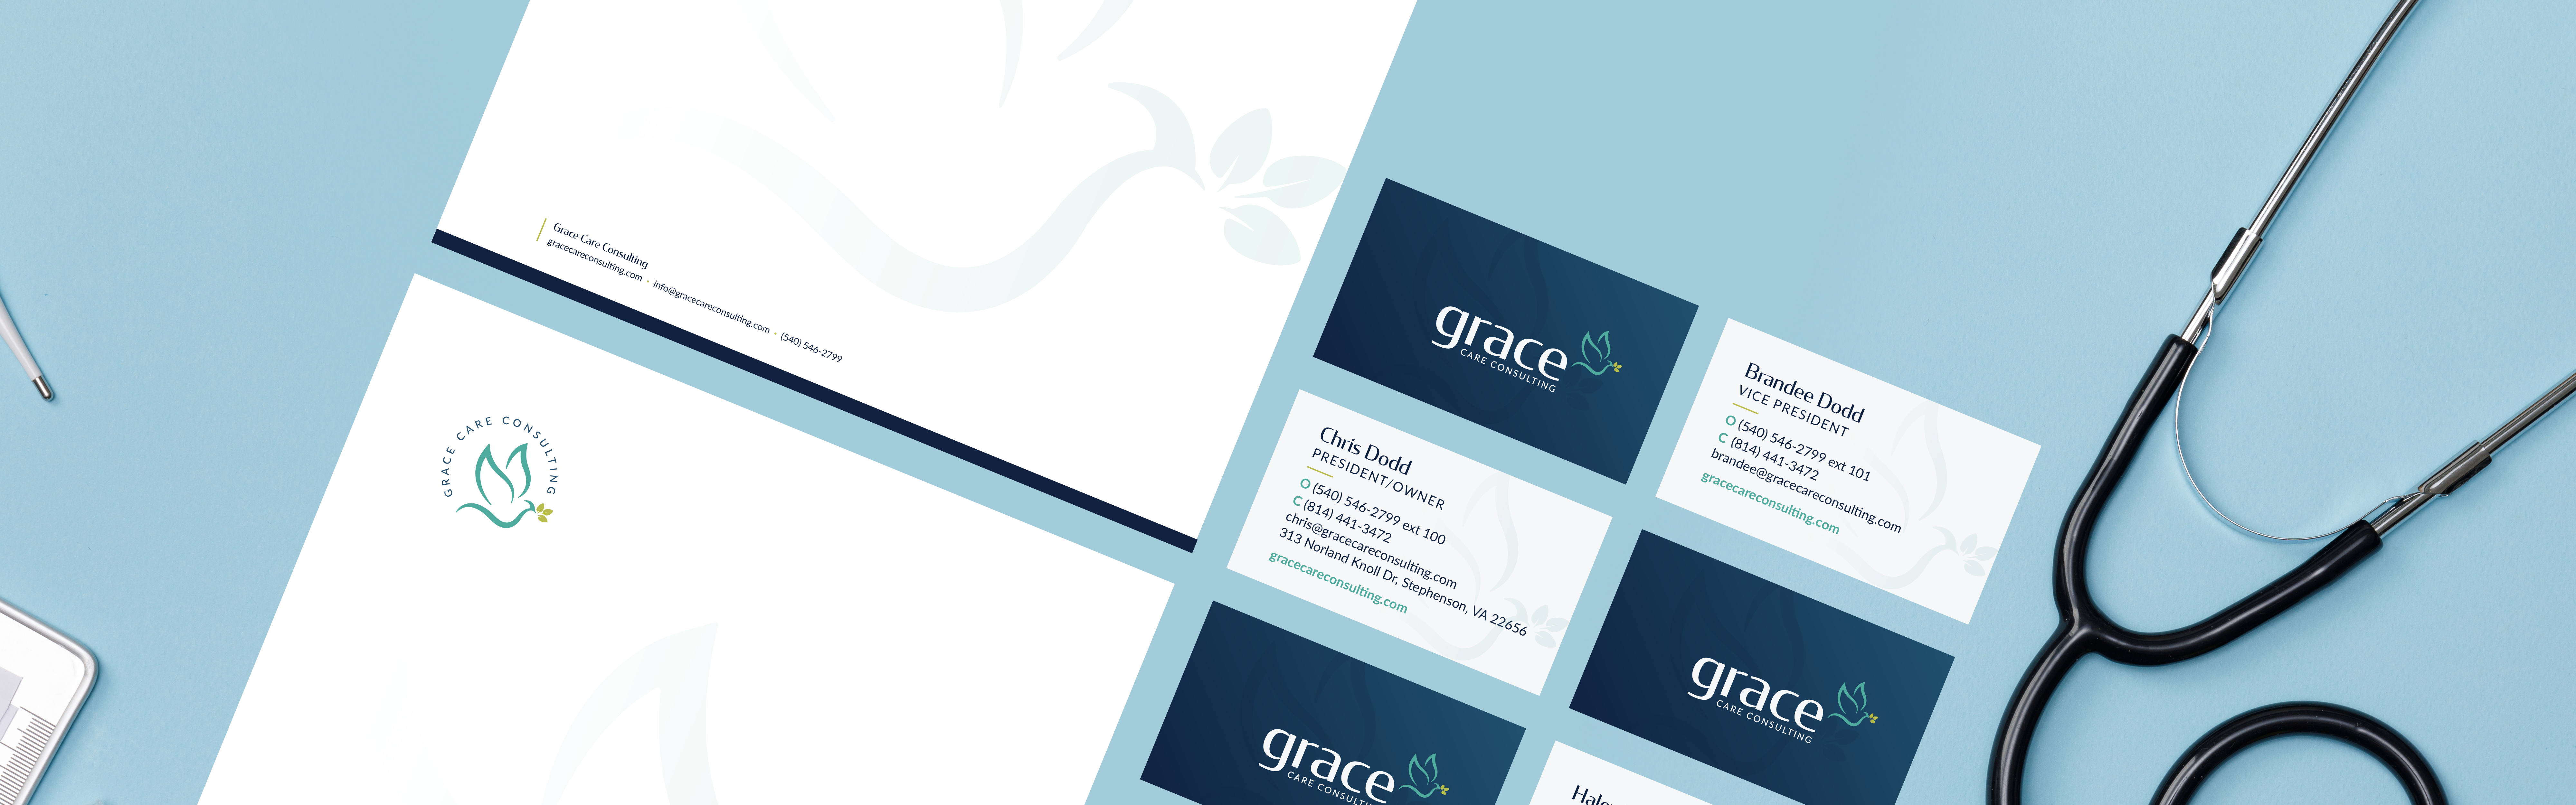 Grace Care Consulting marketing design